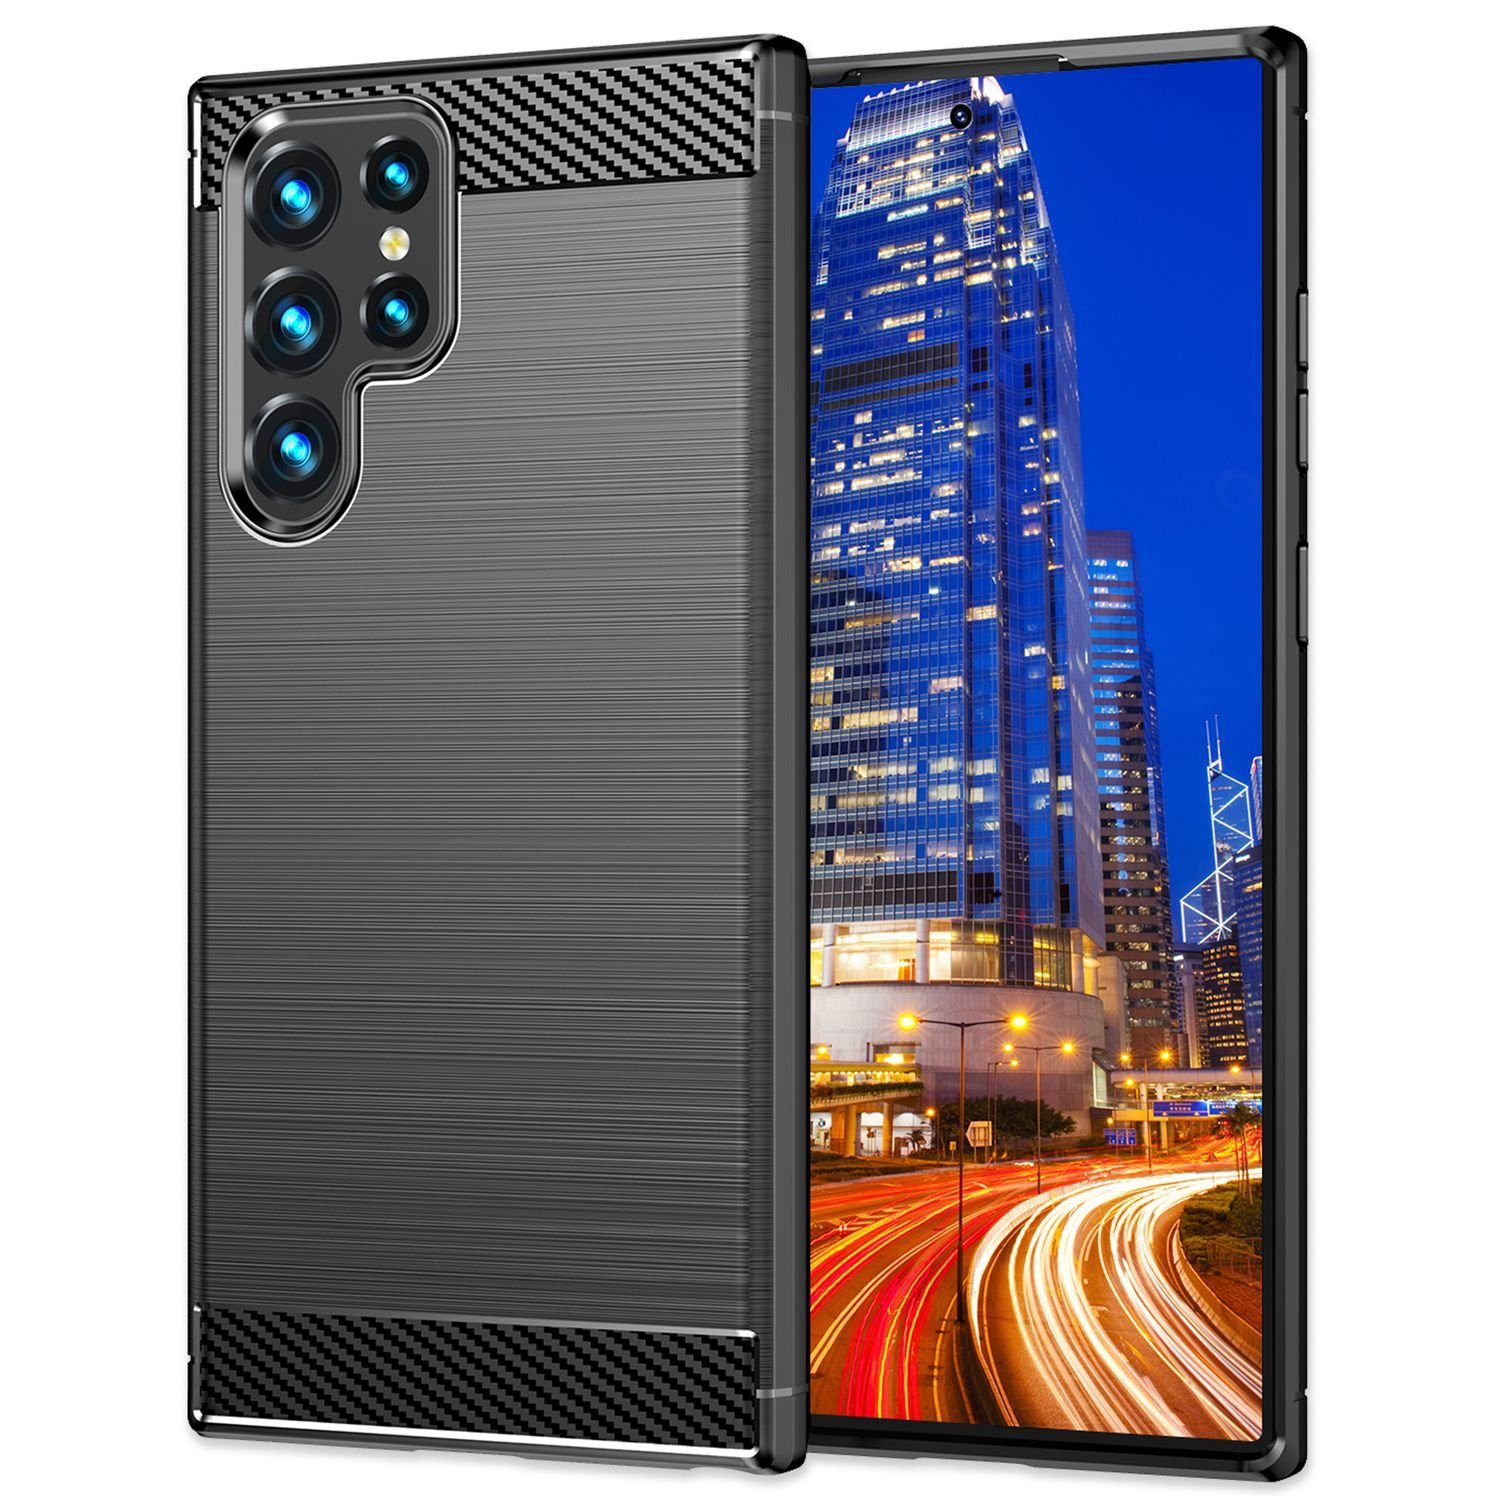 https://i.otto.de/i/otto/e3980e7e-1b85-5f5c-9a22-38df8f778f4e/nalia-smartphone-huelle-samsung-galaxy-s24-ultra-carbon-style-silikon-huelle-matt-schwarz-elegantes-business-cover.jpg?$formatz$